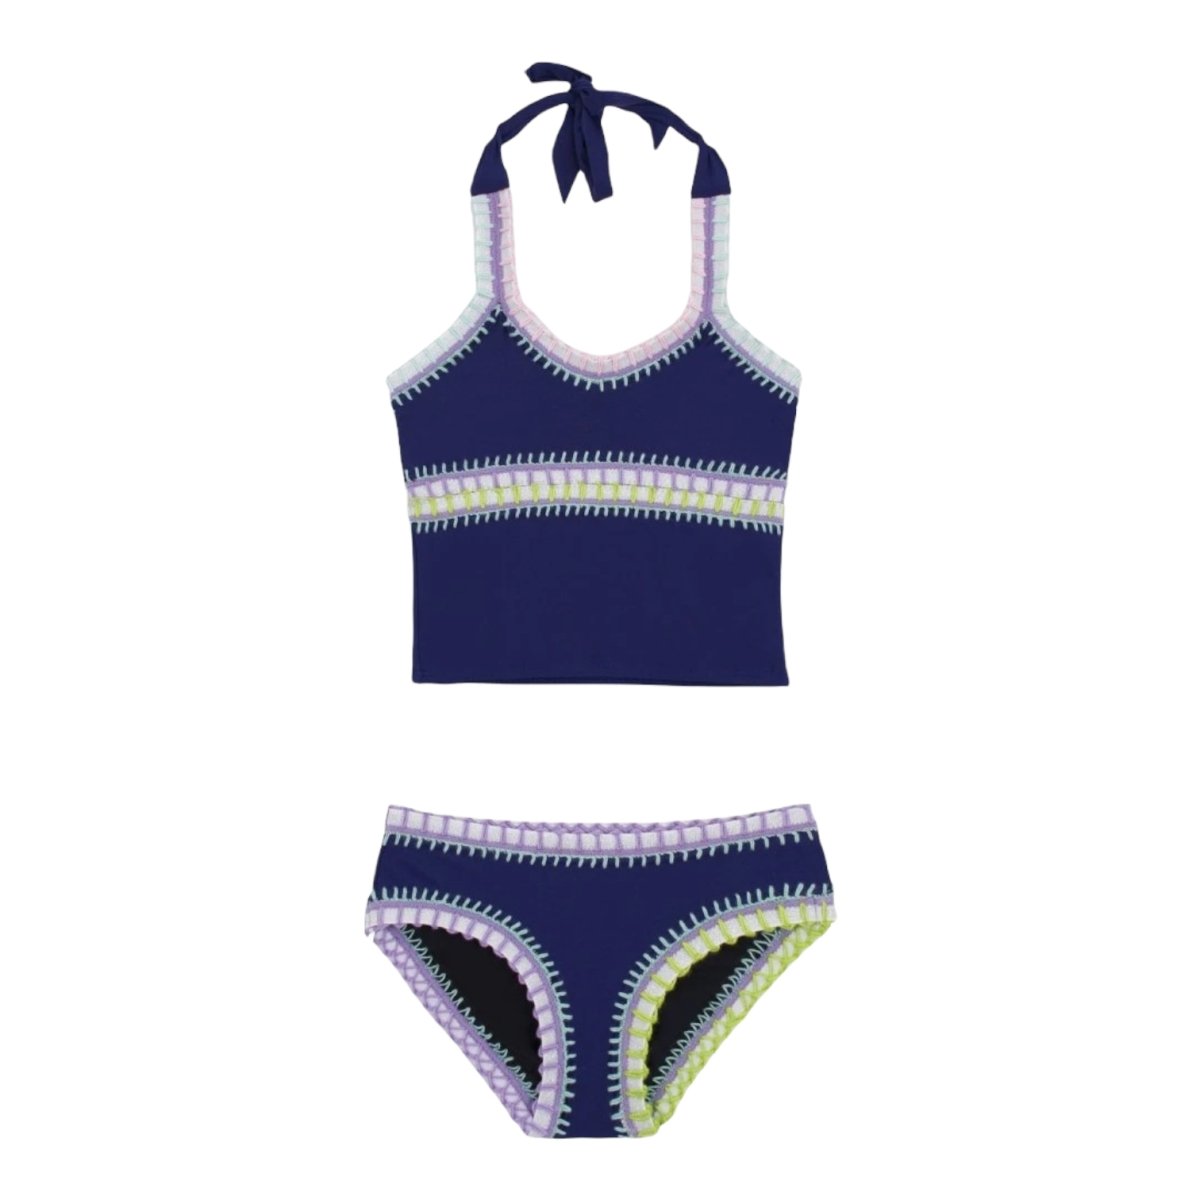 Two Piece Swimsuit - Bikini Sets, Tankini